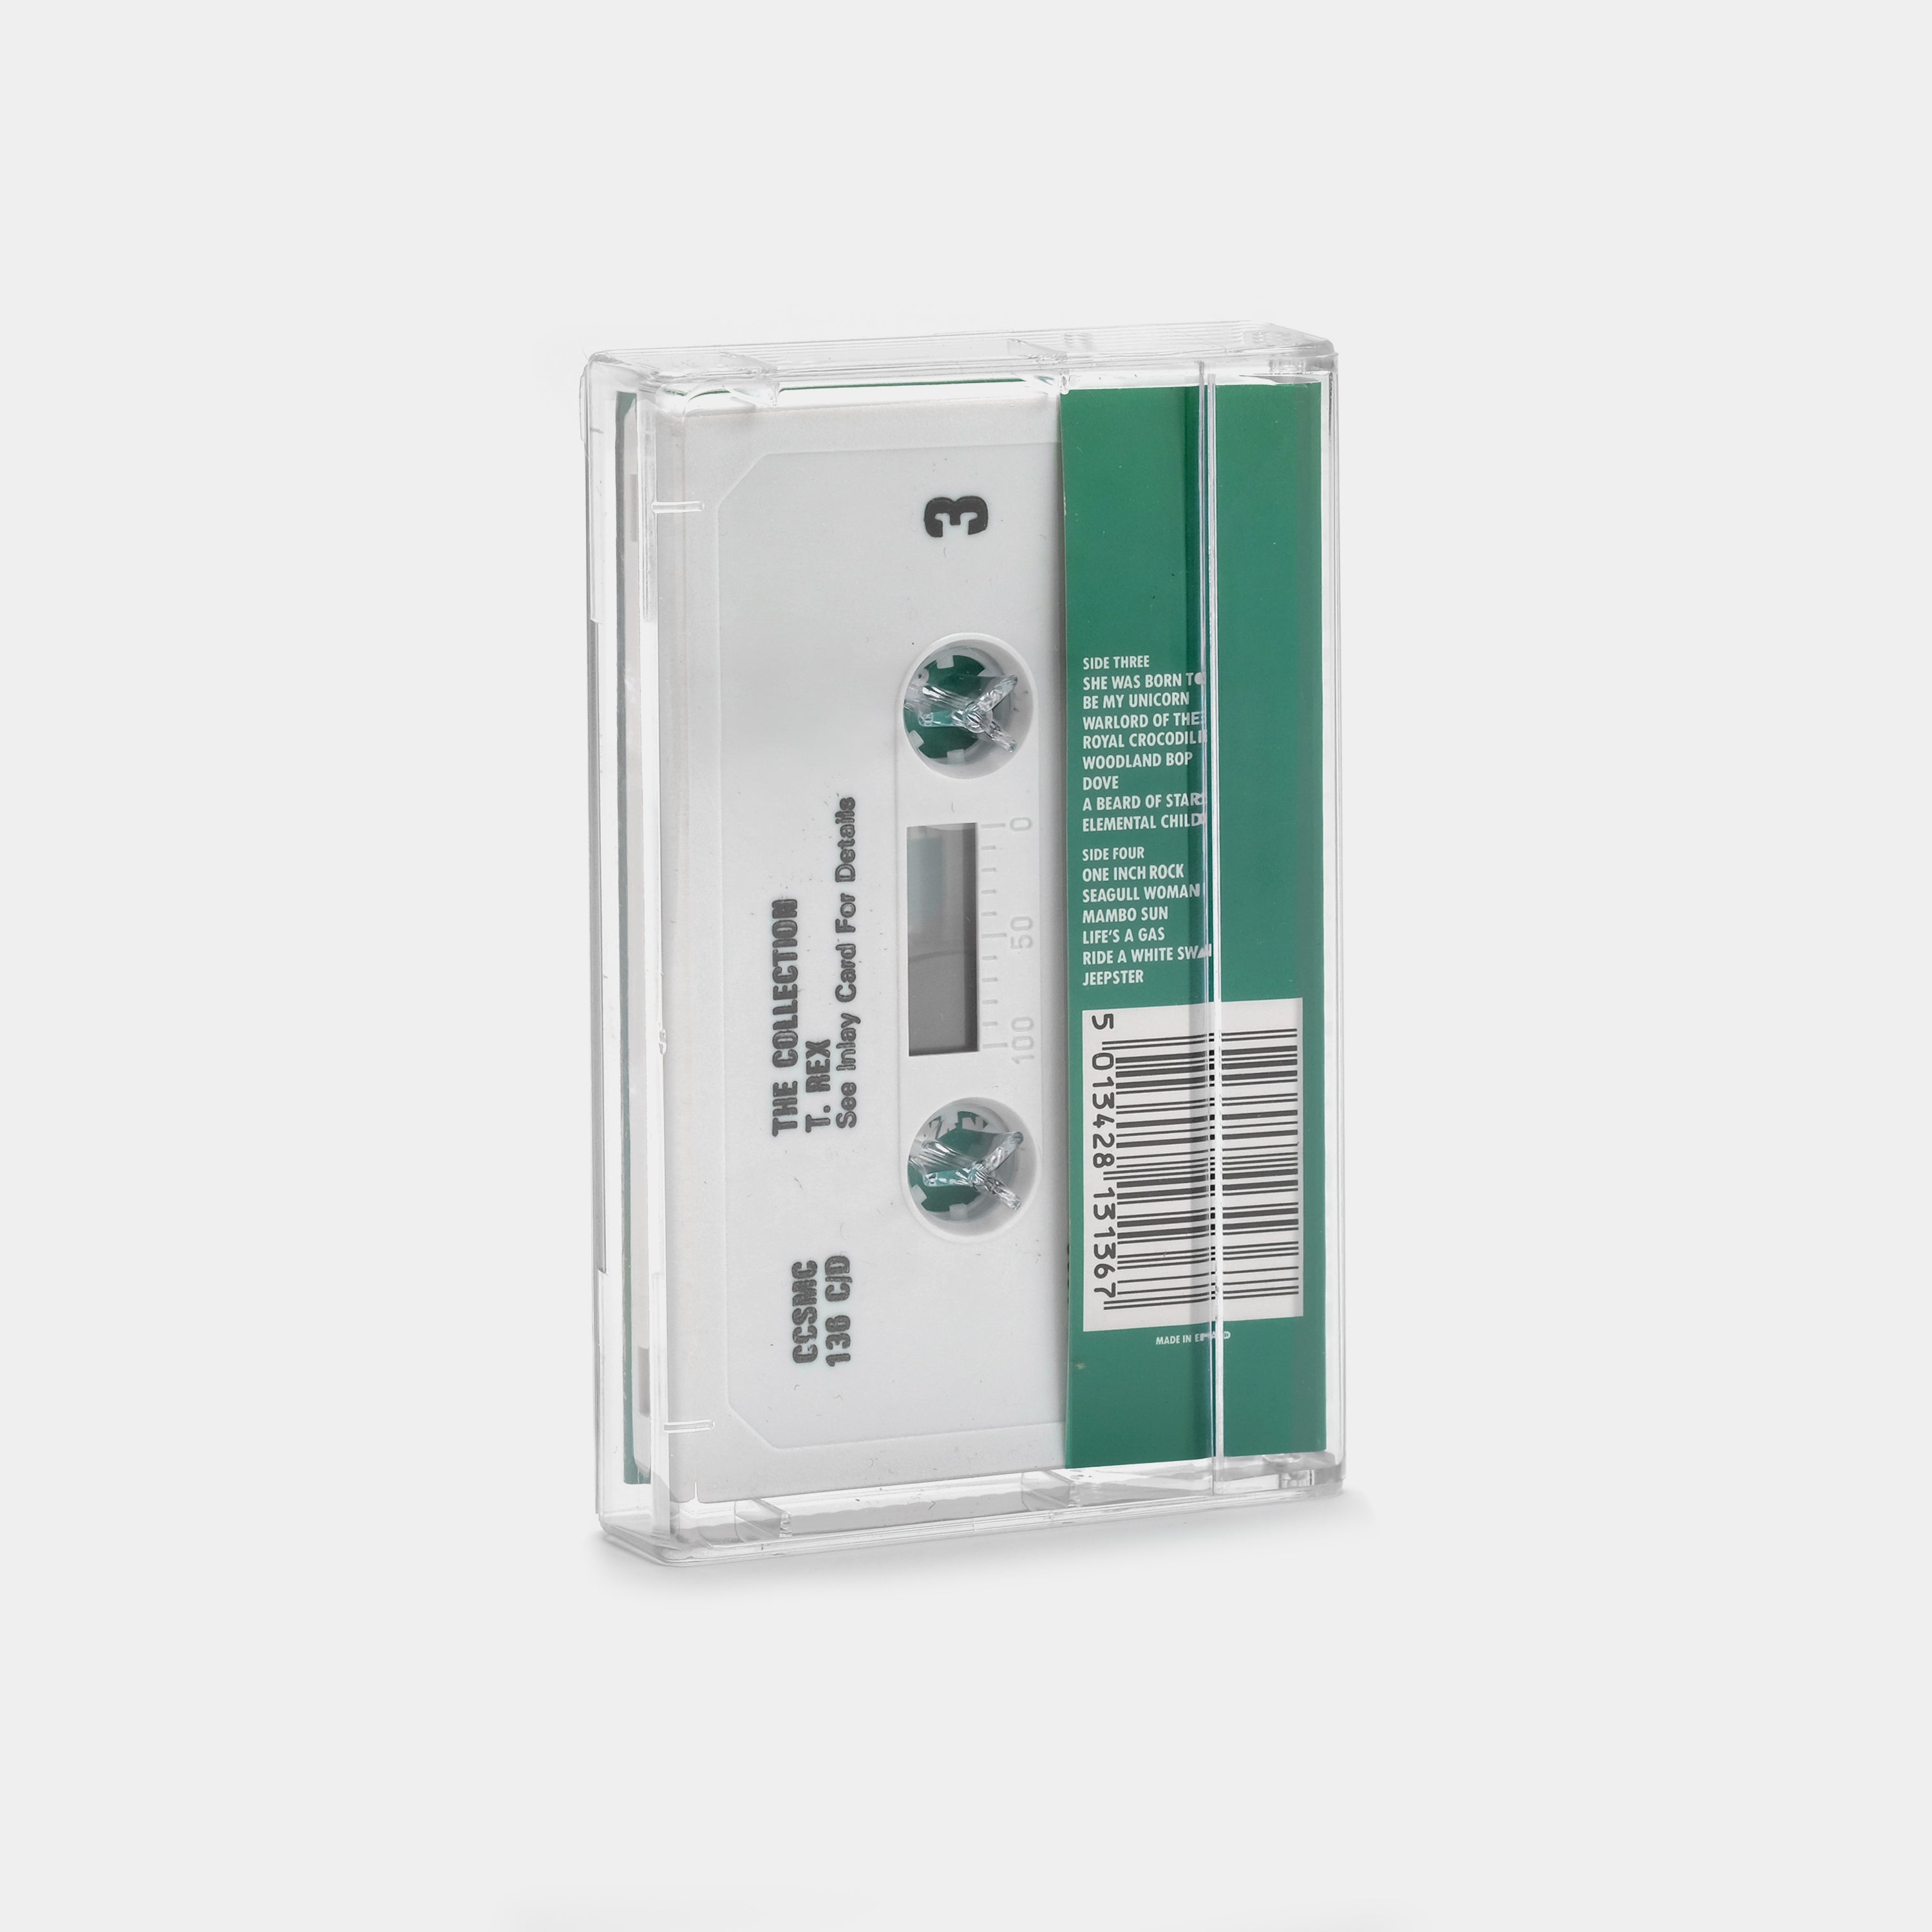 T-Rex - The Collection (Part 2) Cassette Tape